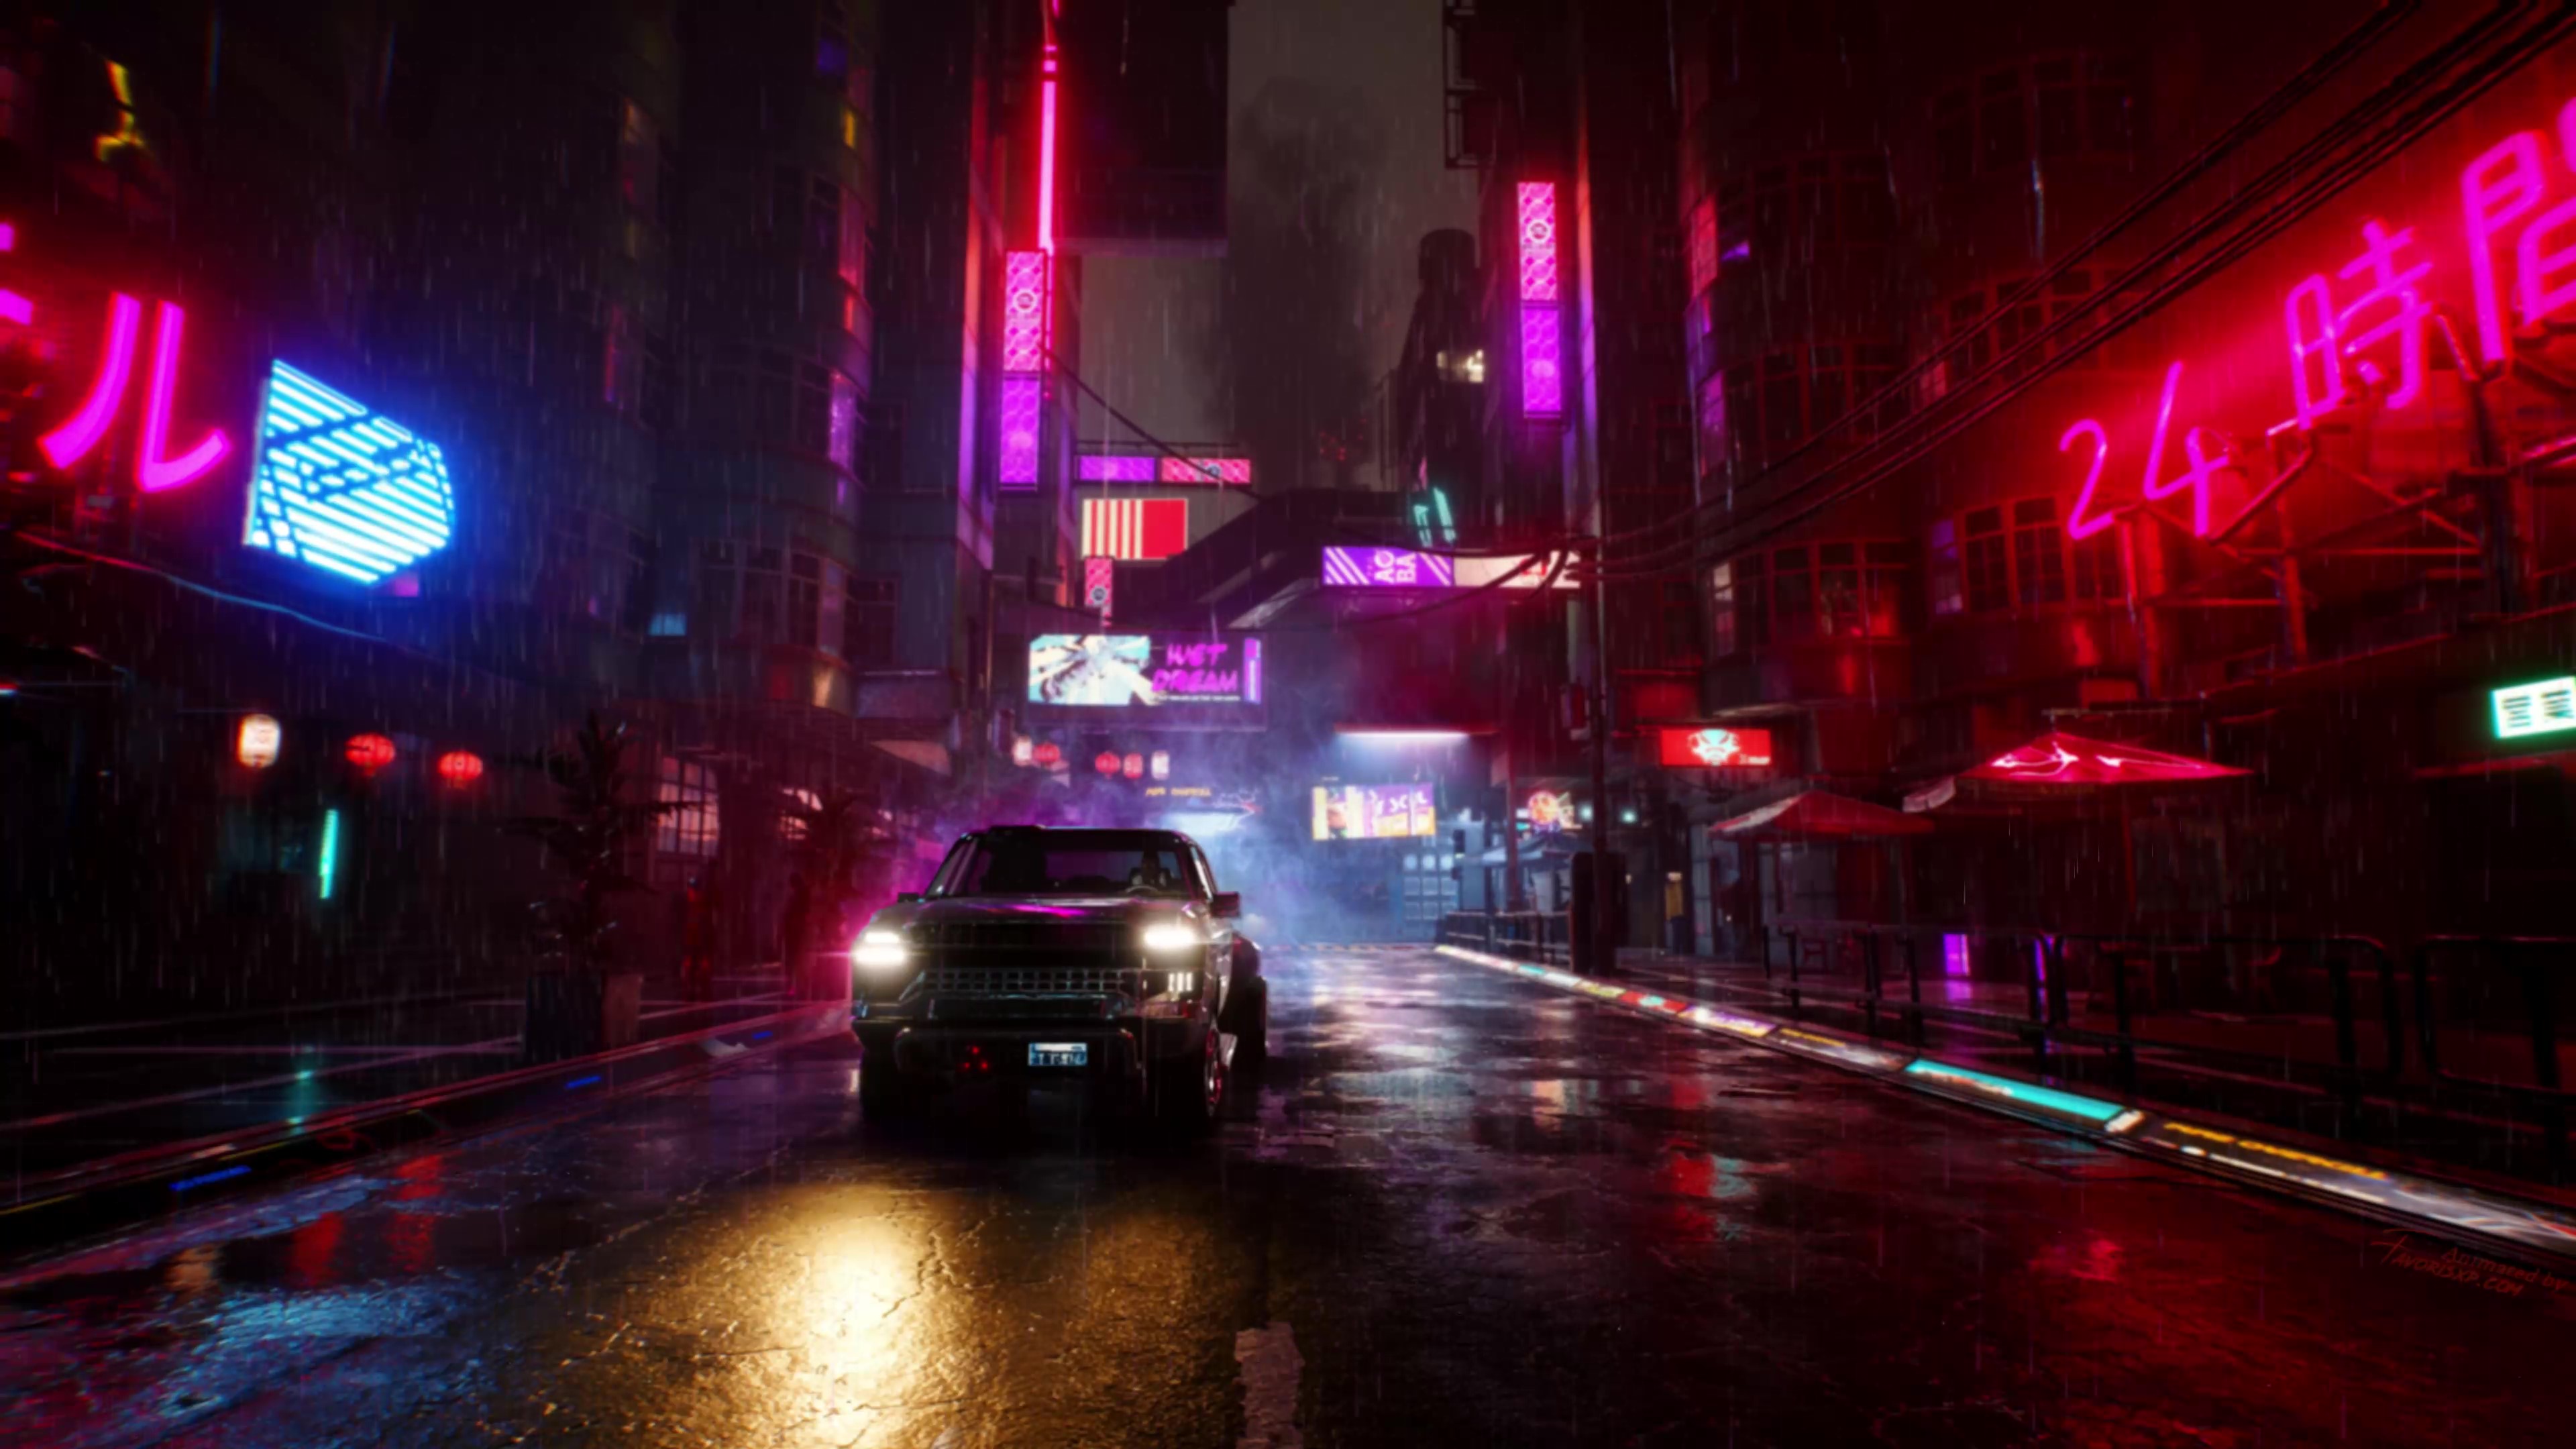 Cyberpunk 2077, City, Night, V, Car, 4K,3840x2160, Wallpaper